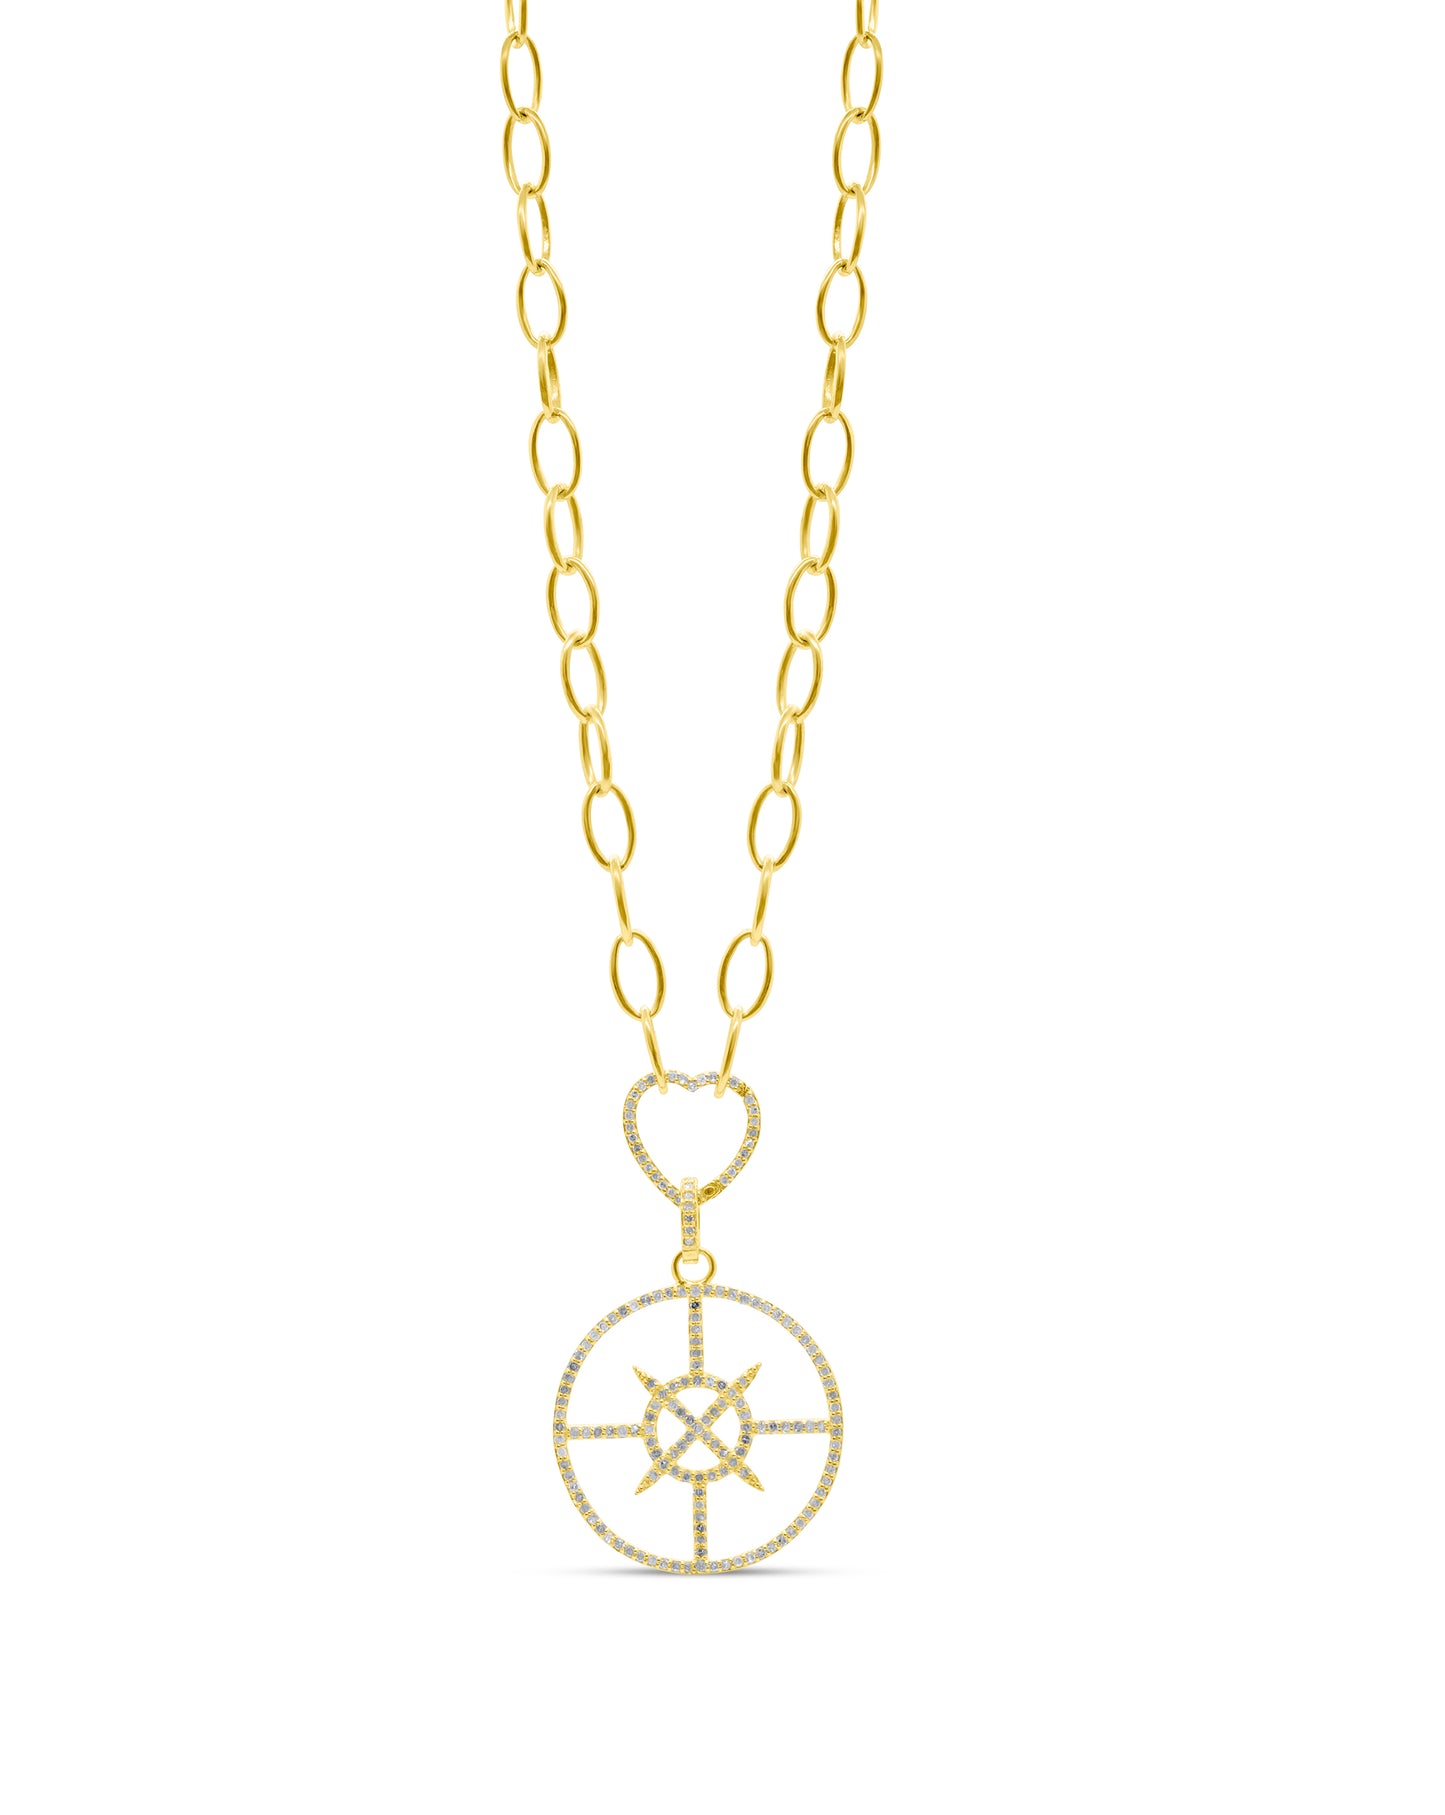 Vermeil Oval Chain with Heart Diamond Clasp